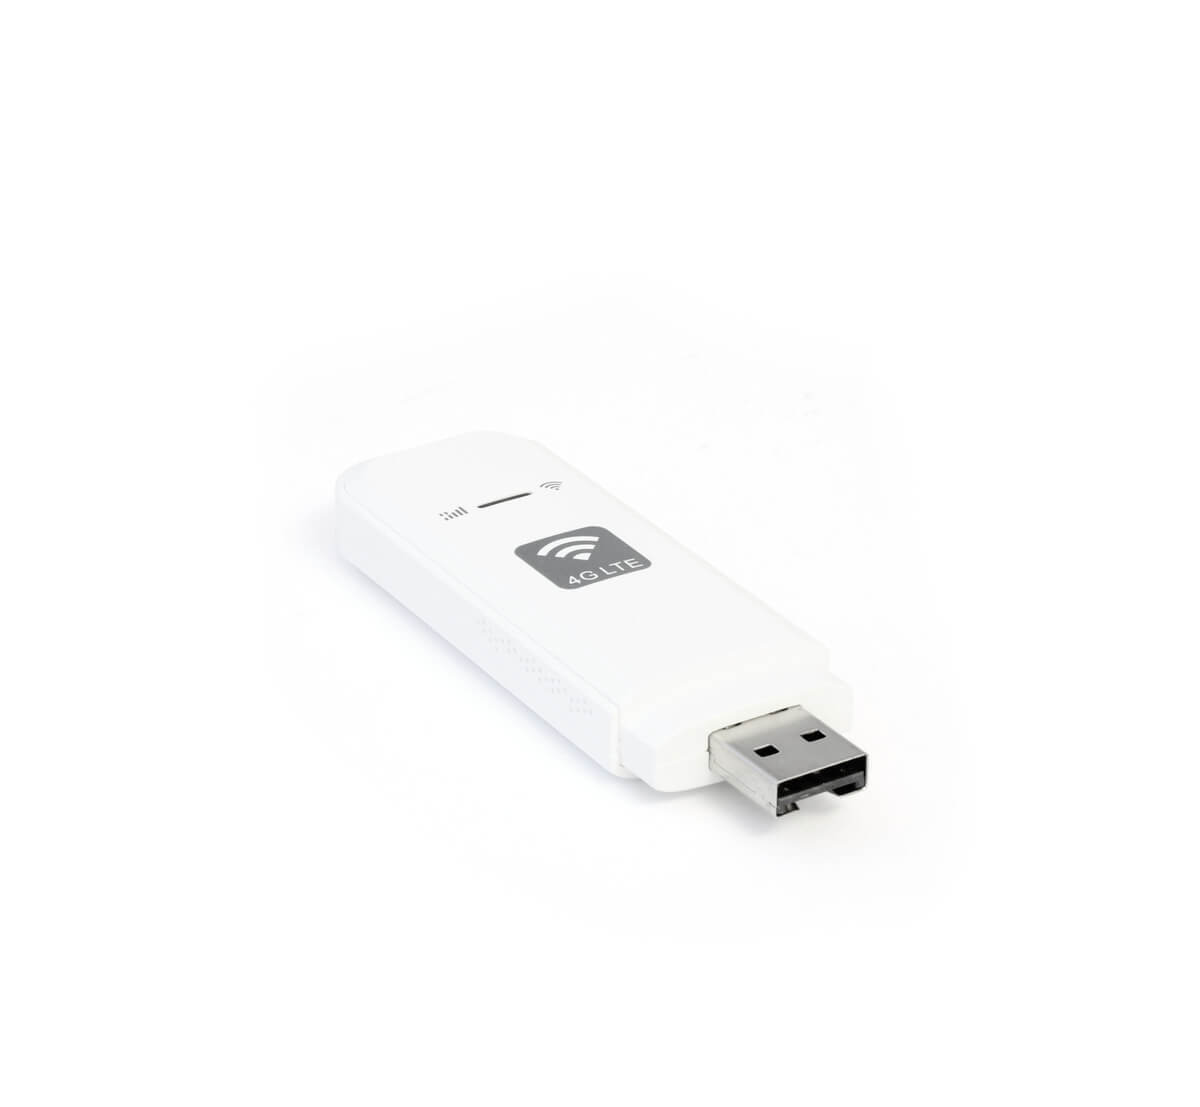 USB Wifi Dongle Wireless USB Adapter Modem Stick 4g Lte Wifi Network Card  Ethernet Mobile Broadband Pocket Hotspot for Laptop pc